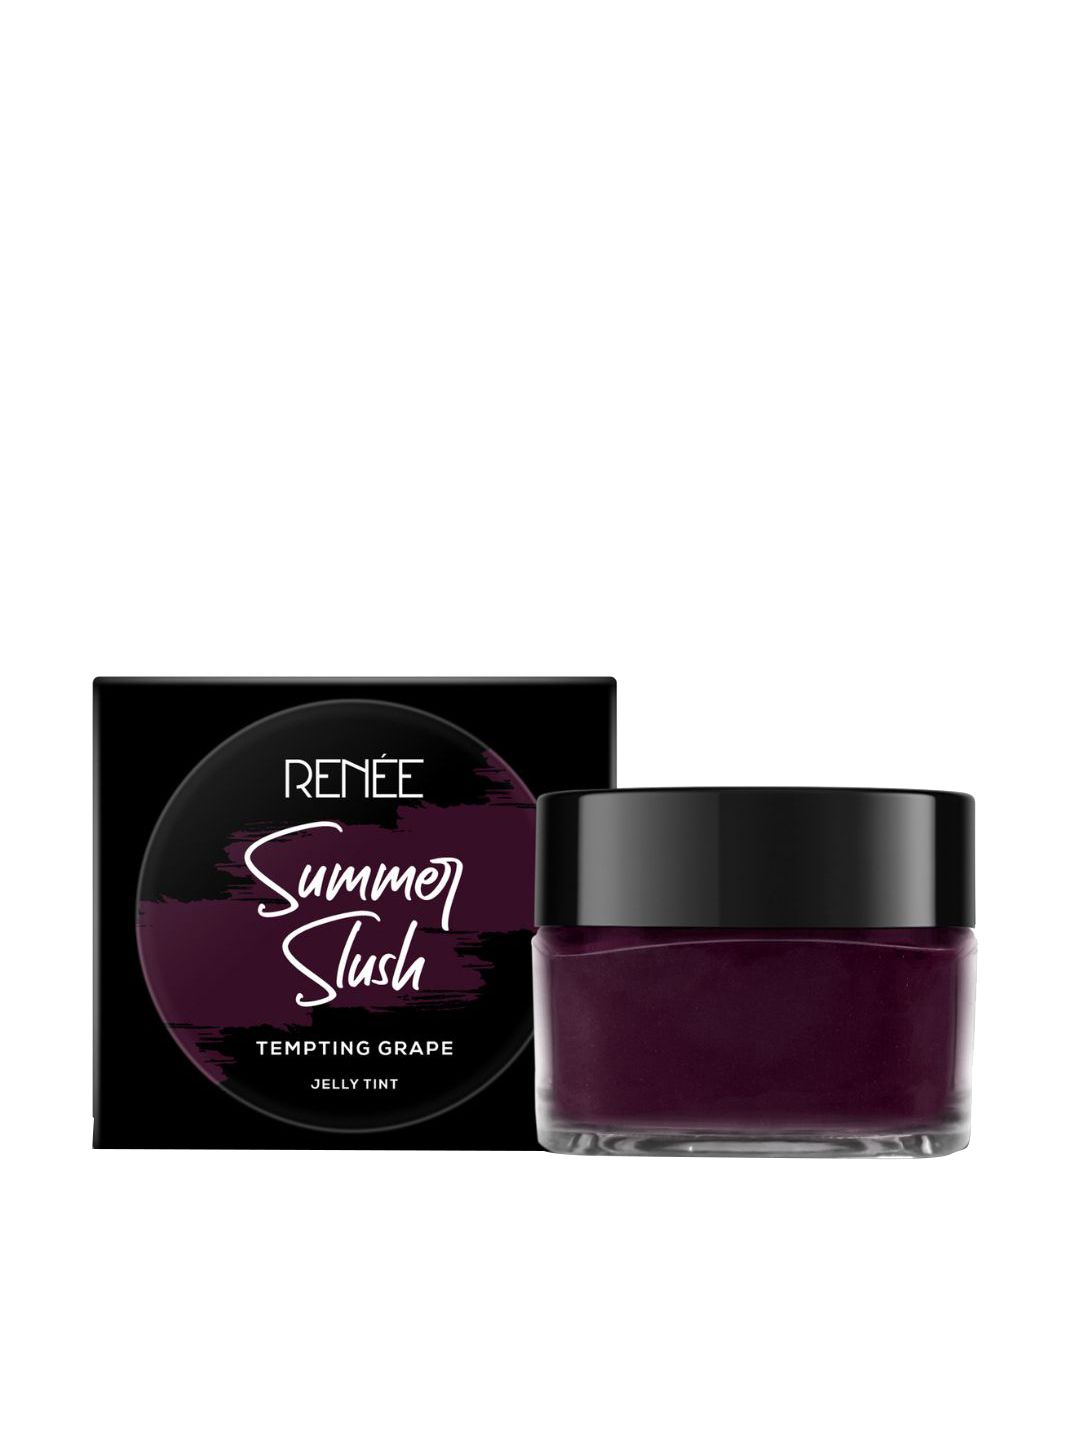 RENEE Summer Slush Jelly Tint - Tempting Grape 13g Price in India